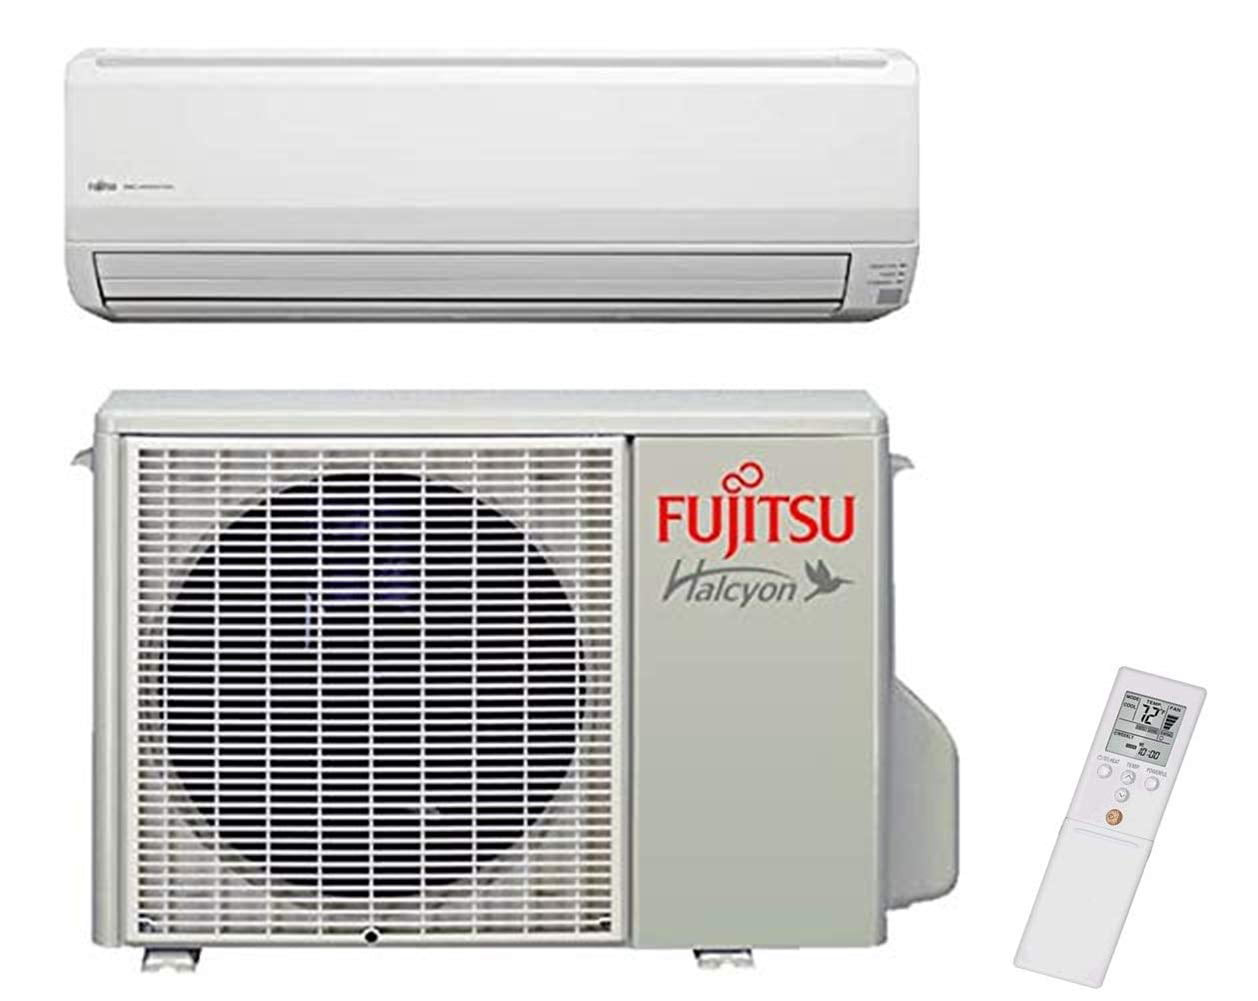 fujitsu-15-000-btu-wall-mounted-single-zone-mini-split-ductless-heat